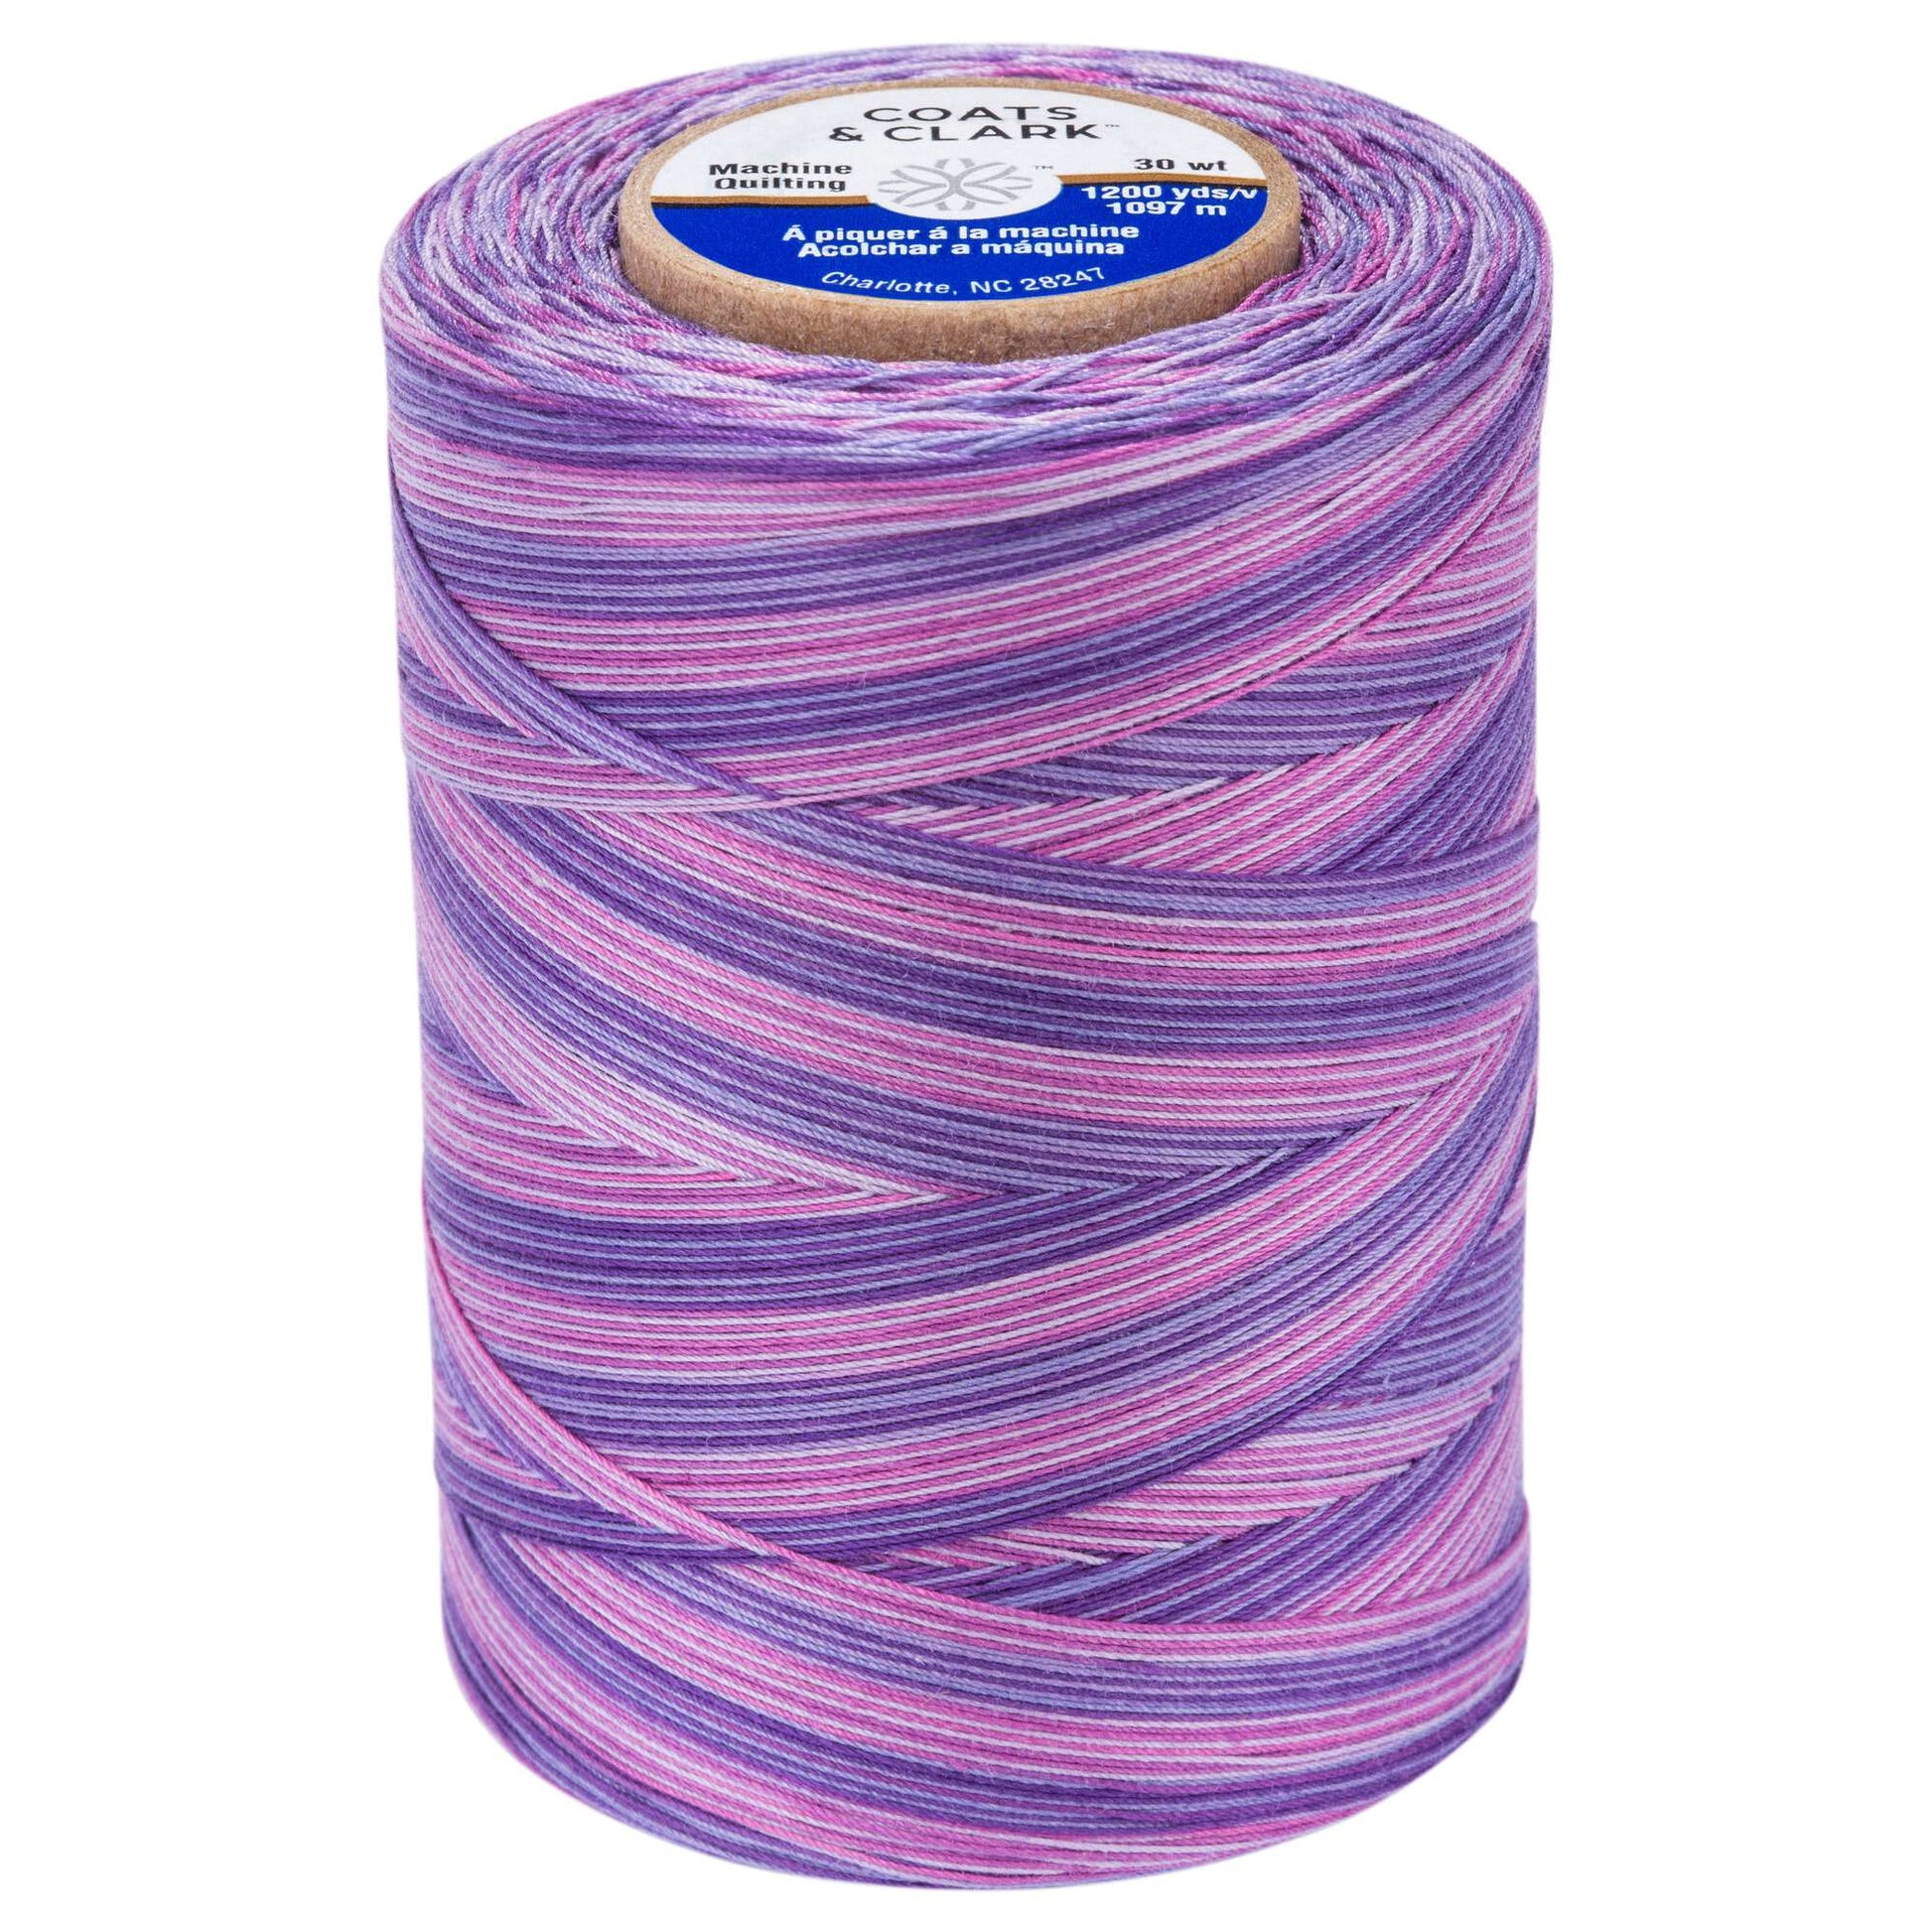 Coats & Clark Cotton Machine Quilting Multicolor Thread (1200 Yards) Plum Shadows